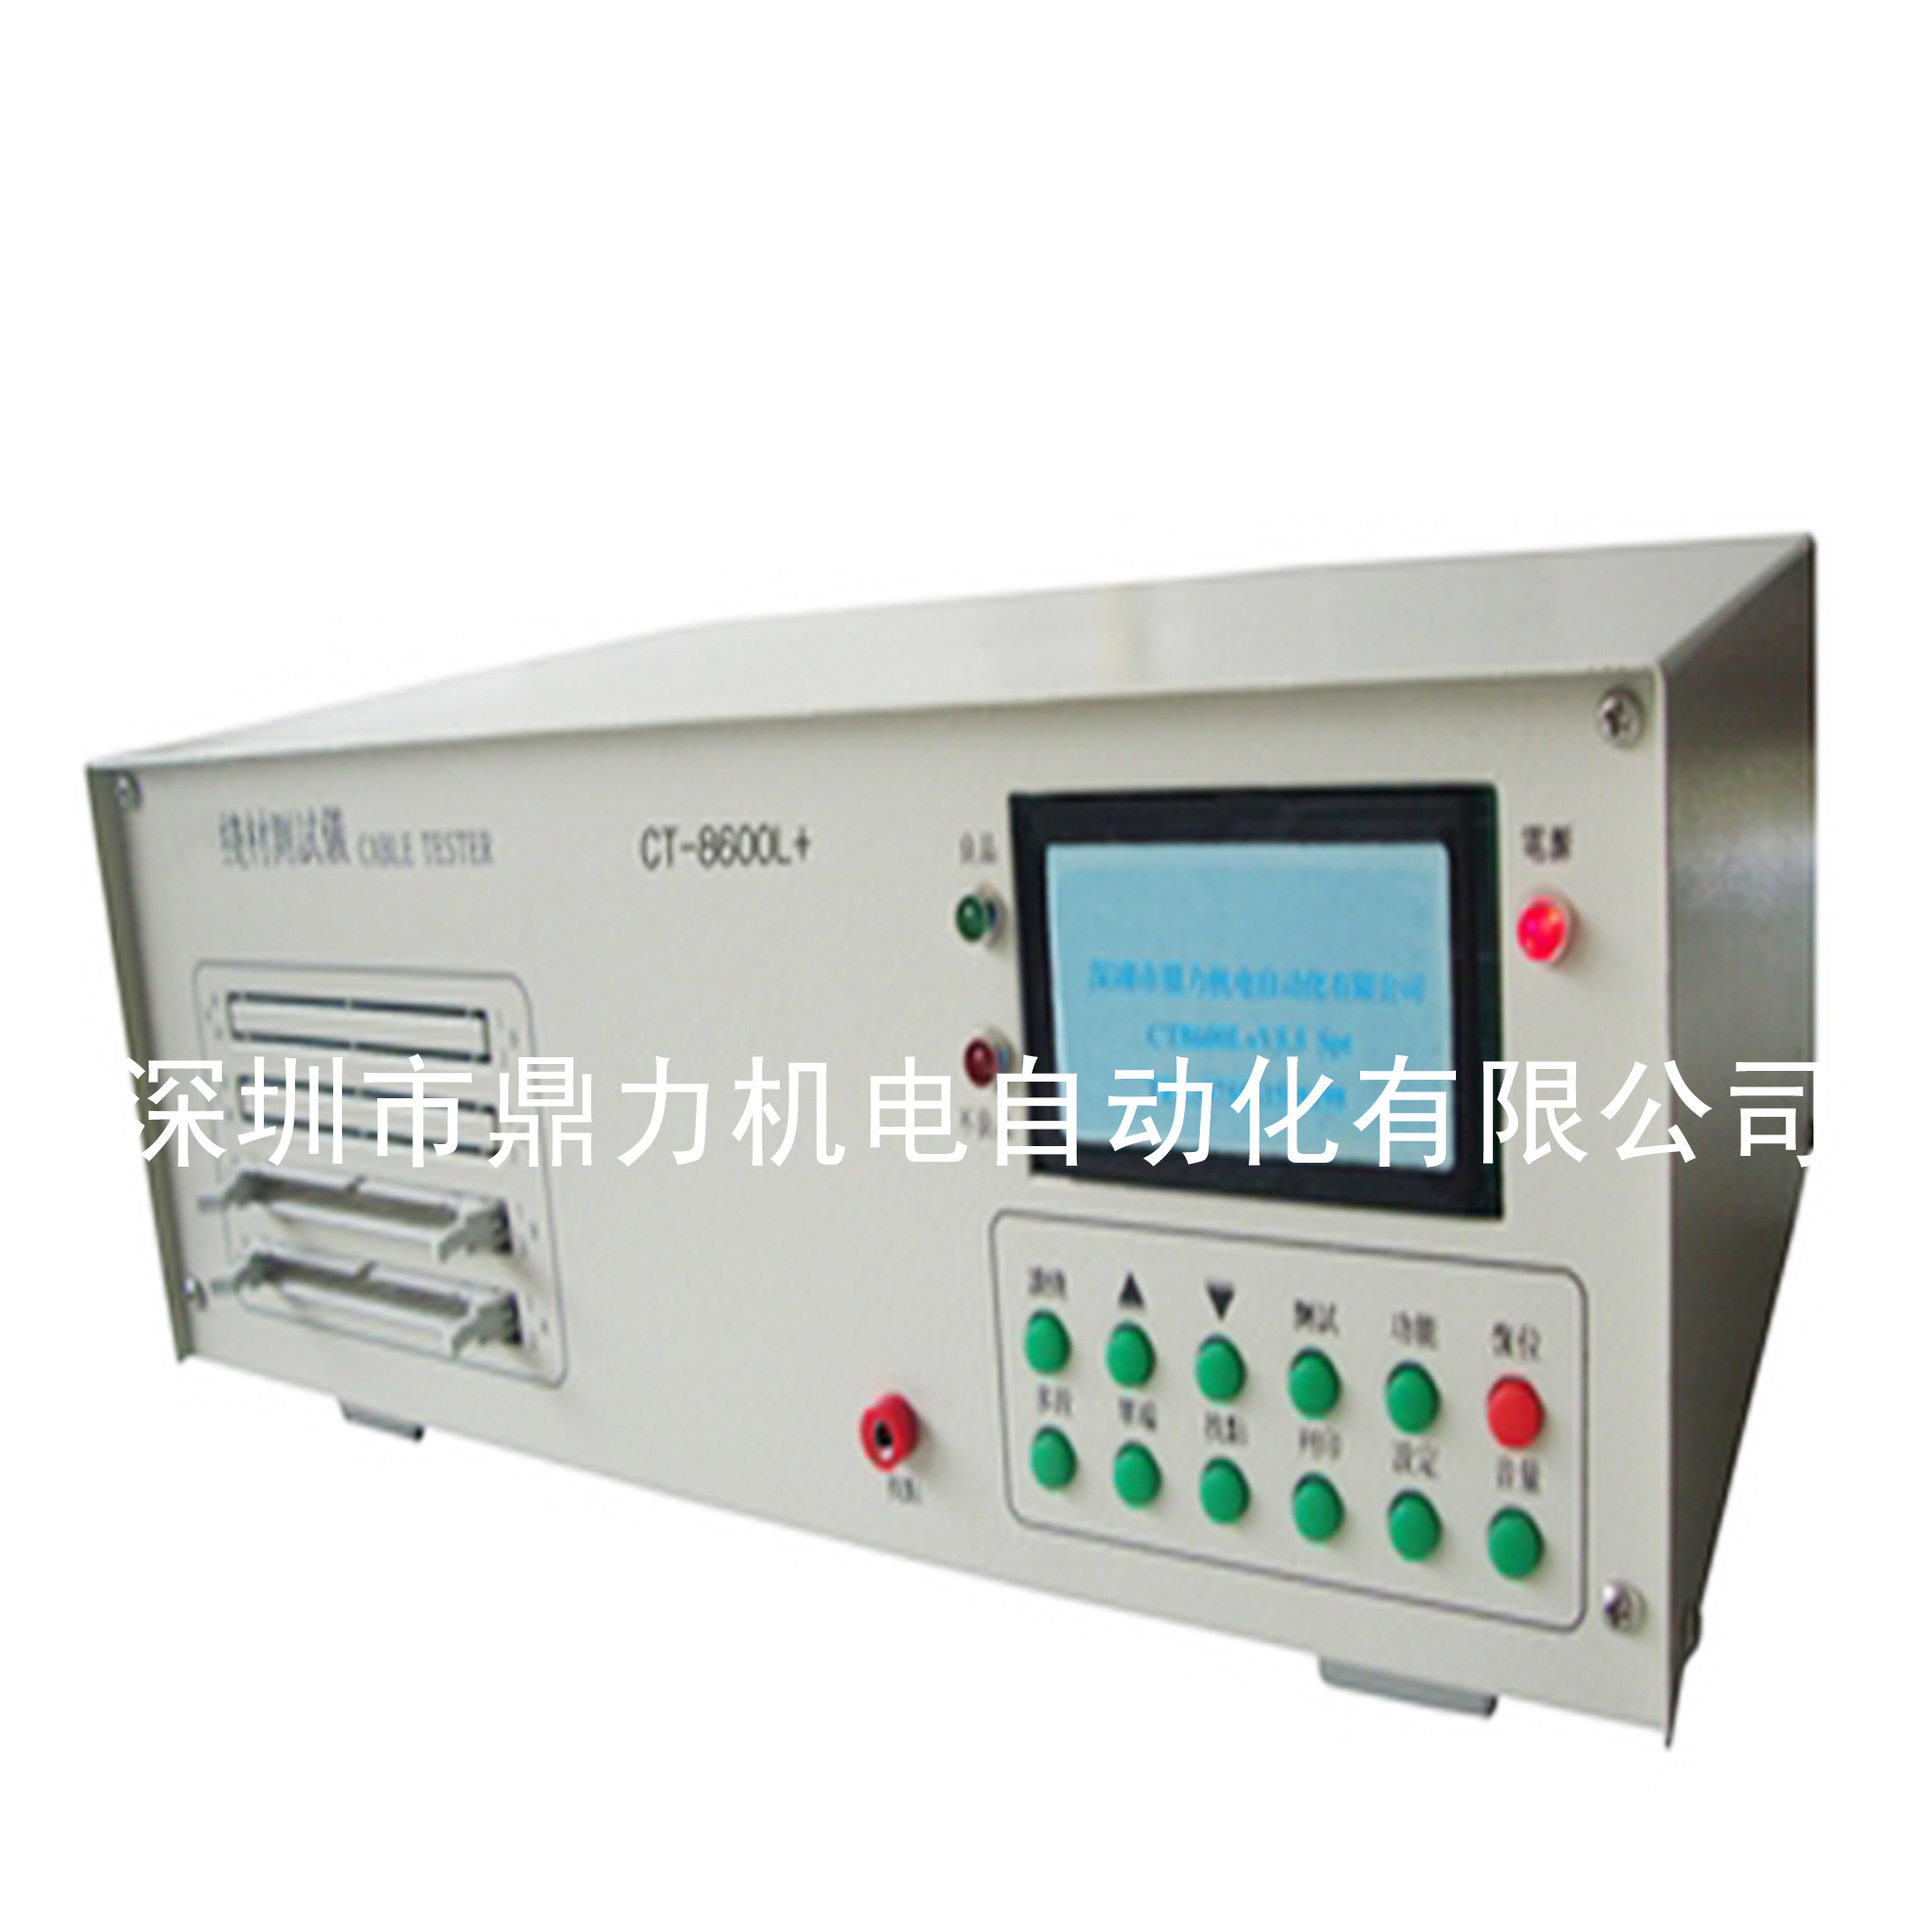 DL-8600L+多功能線材測試機